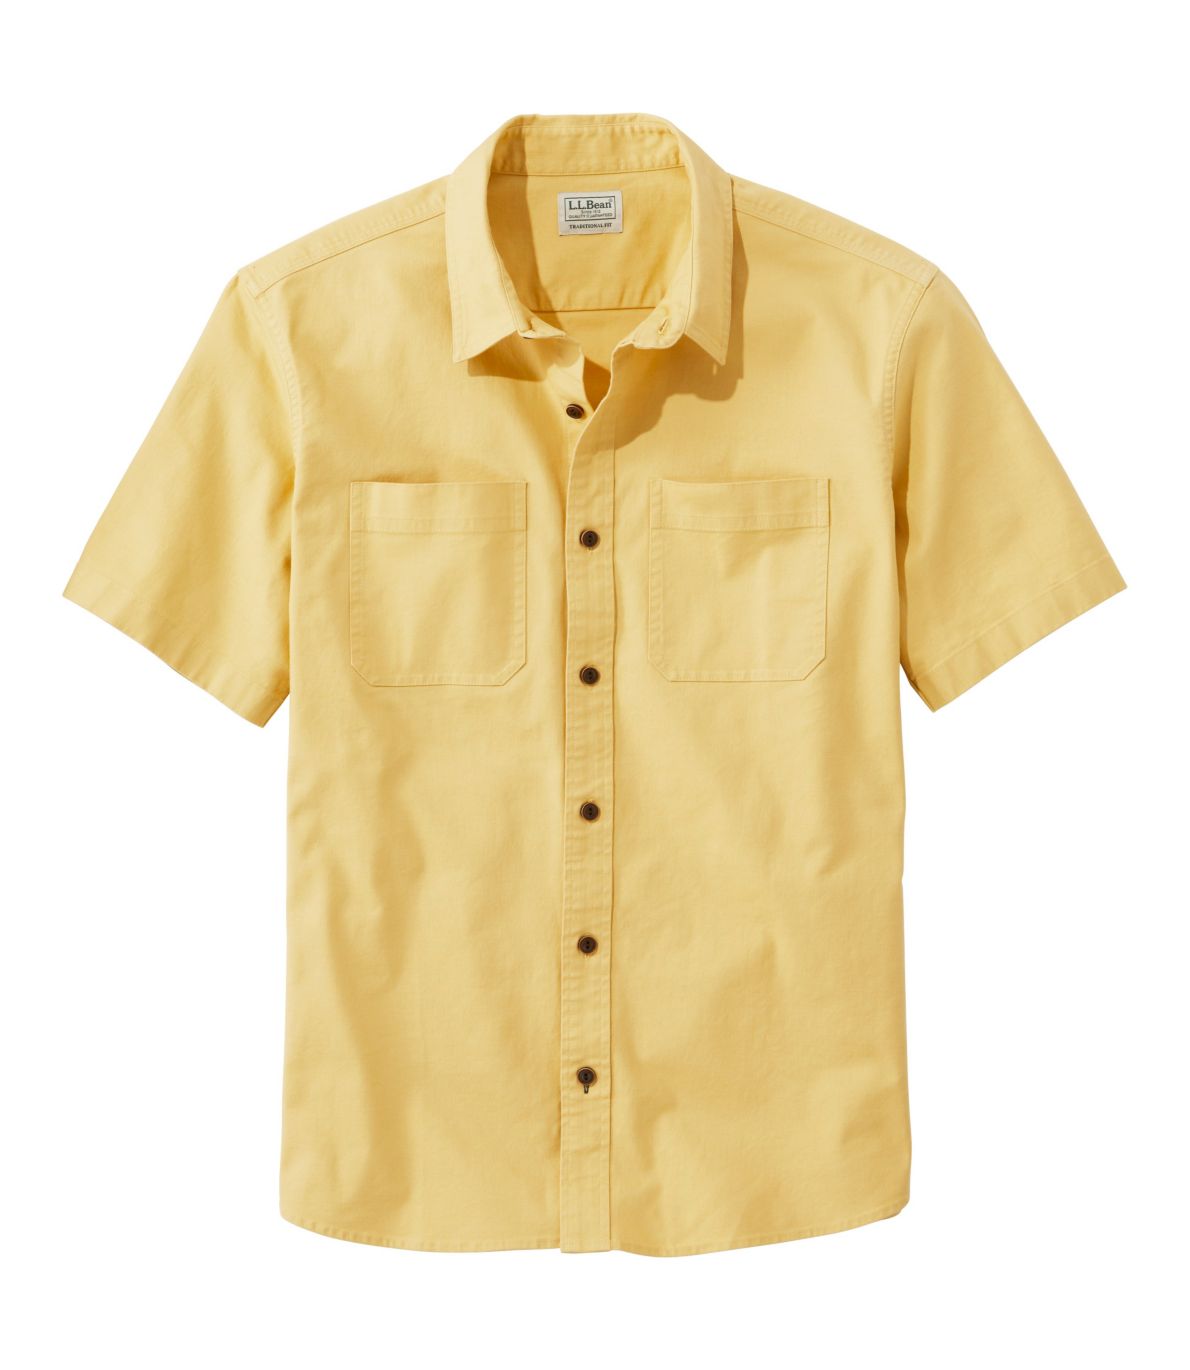 Men's BeanFlex Twill Shirt, Traditional Untucked Fit, Short-Sleeve